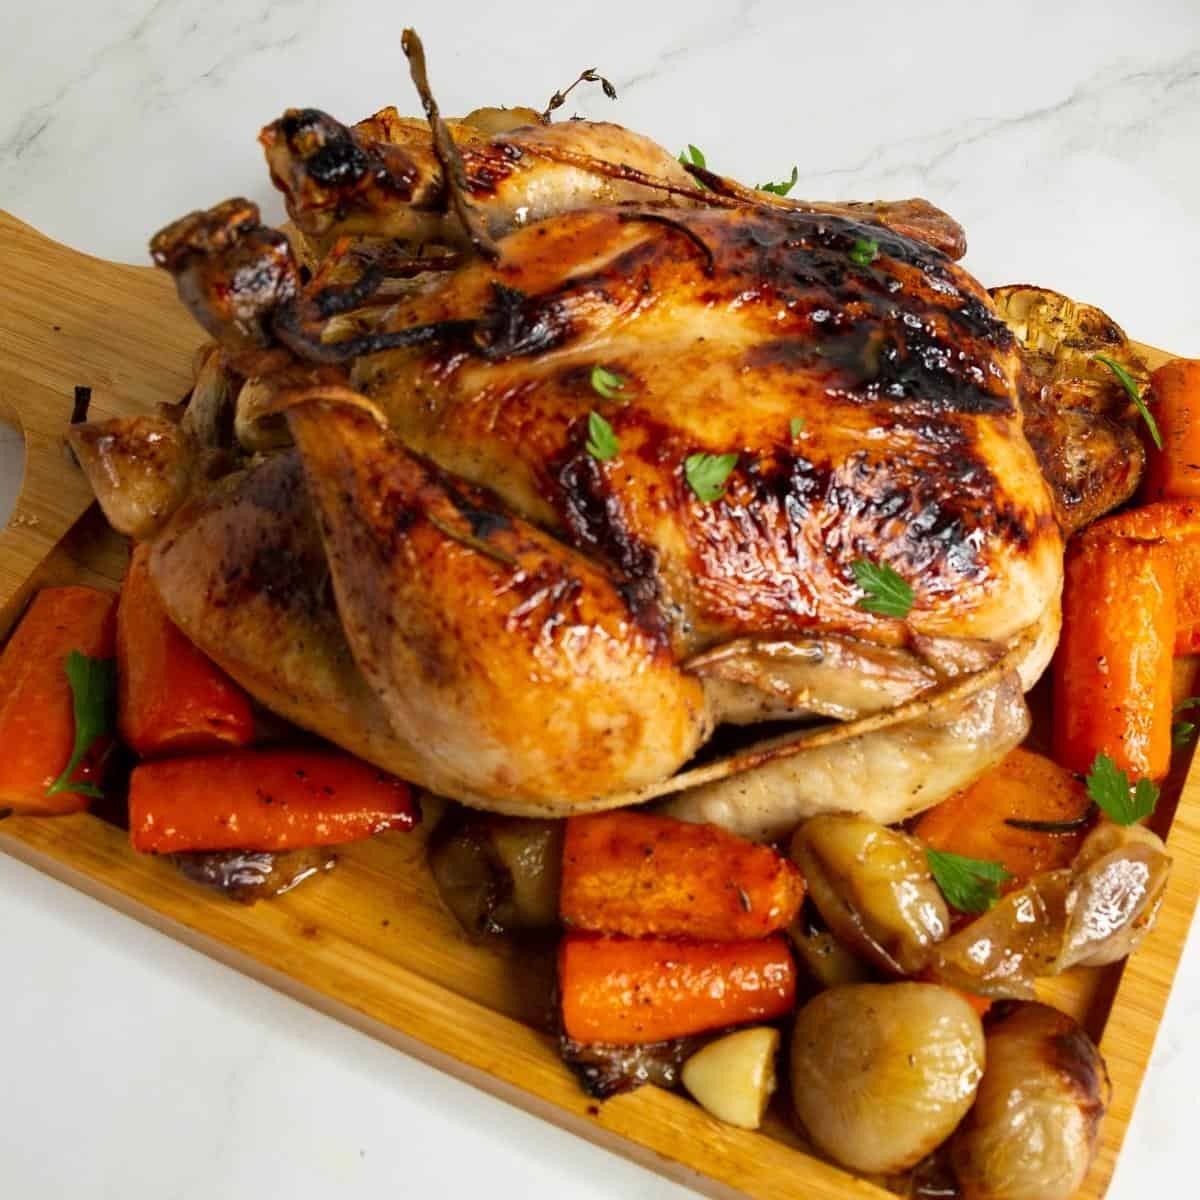 Roast chicken with veggies on a serving platter.